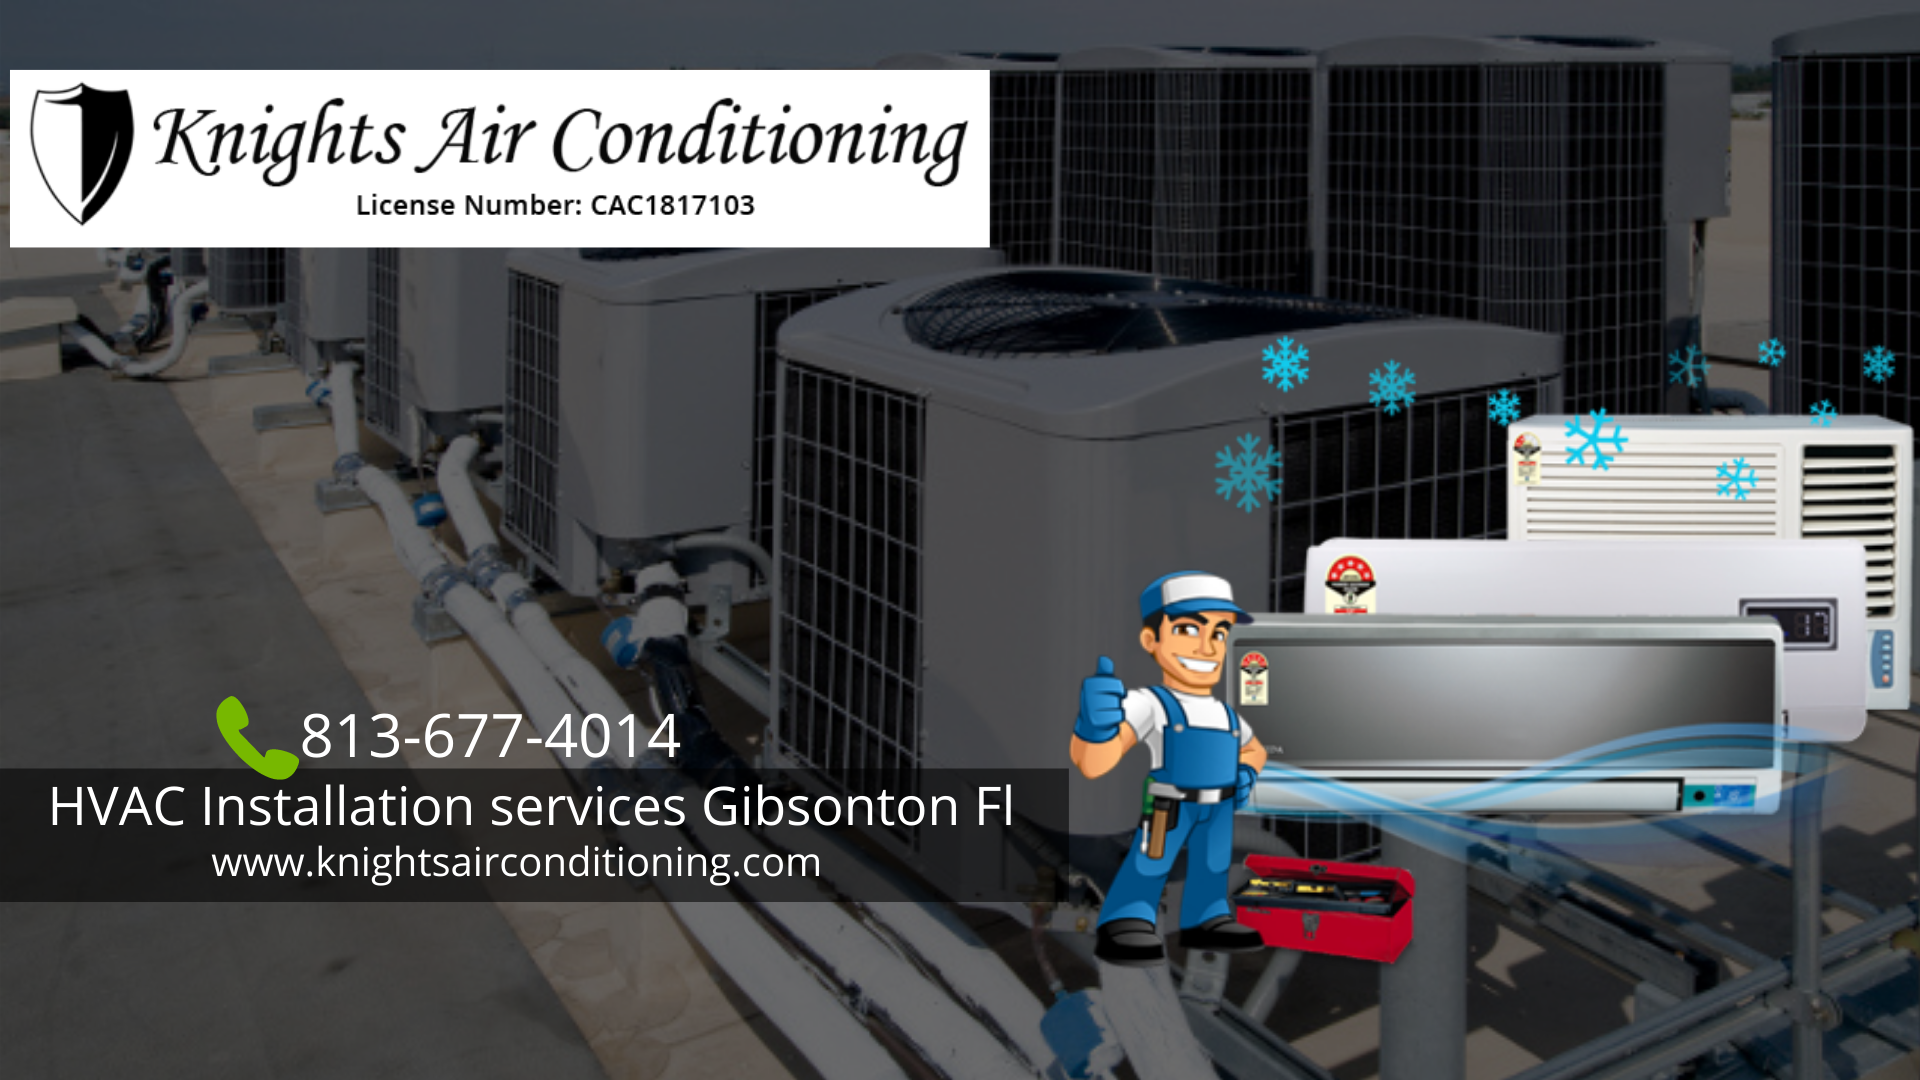 HVAC installation services in Gibsonton, Florida